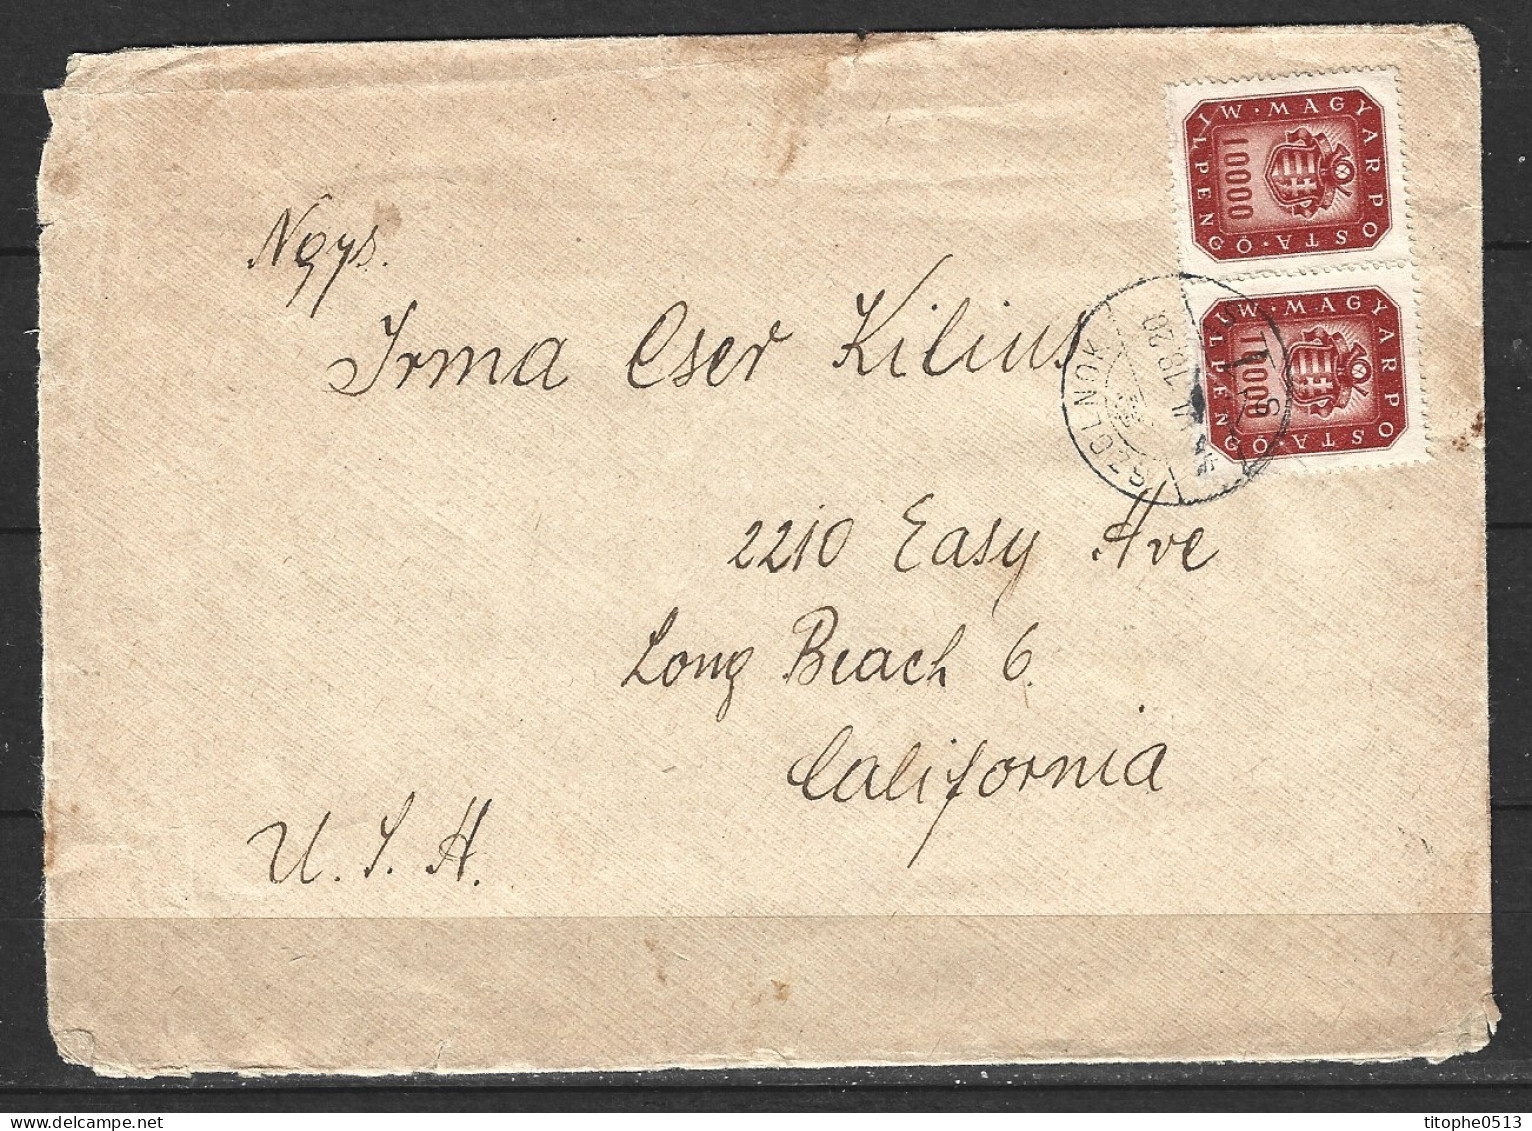 HONGRIE. Timbres De 1946 Sur Enveloppe Ayant Circulé. Armoiries. - Briefe U. Dokumente